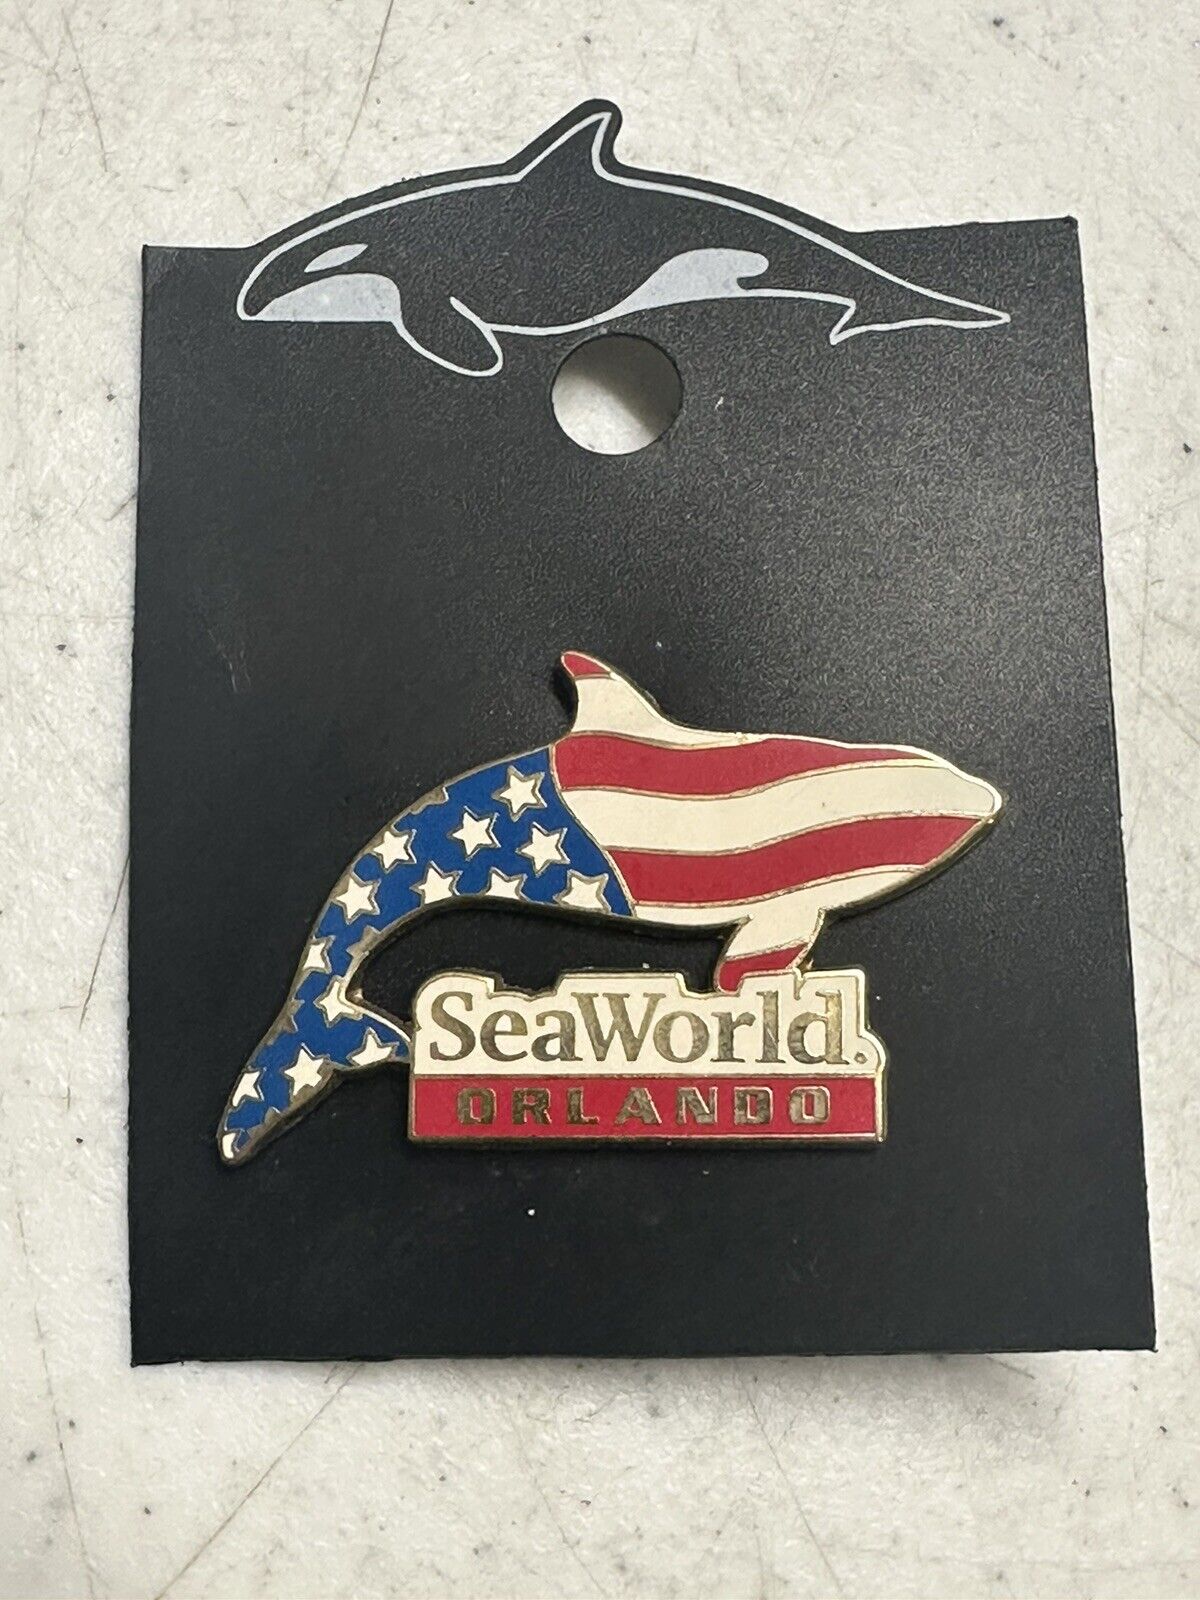 Sea World Orlando Pin Killer Whale American Flag Orca Rare 2x1.25 Seaworld New